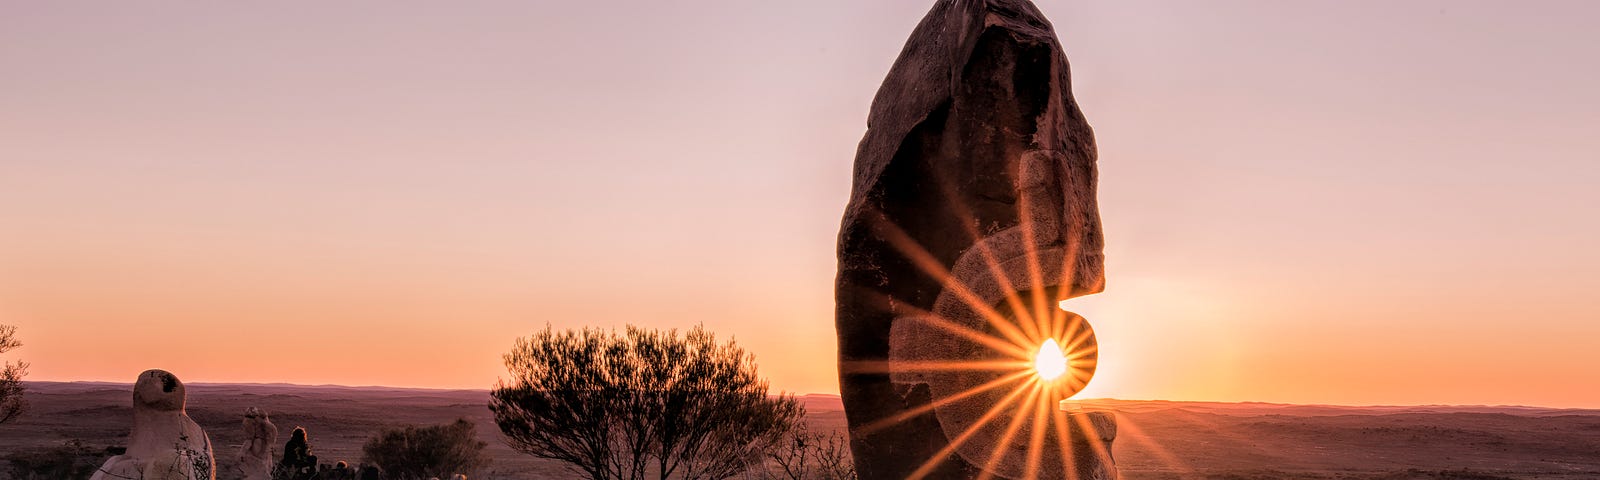 The sun’s healing energy shines through a rock in a desolate desert landscape.